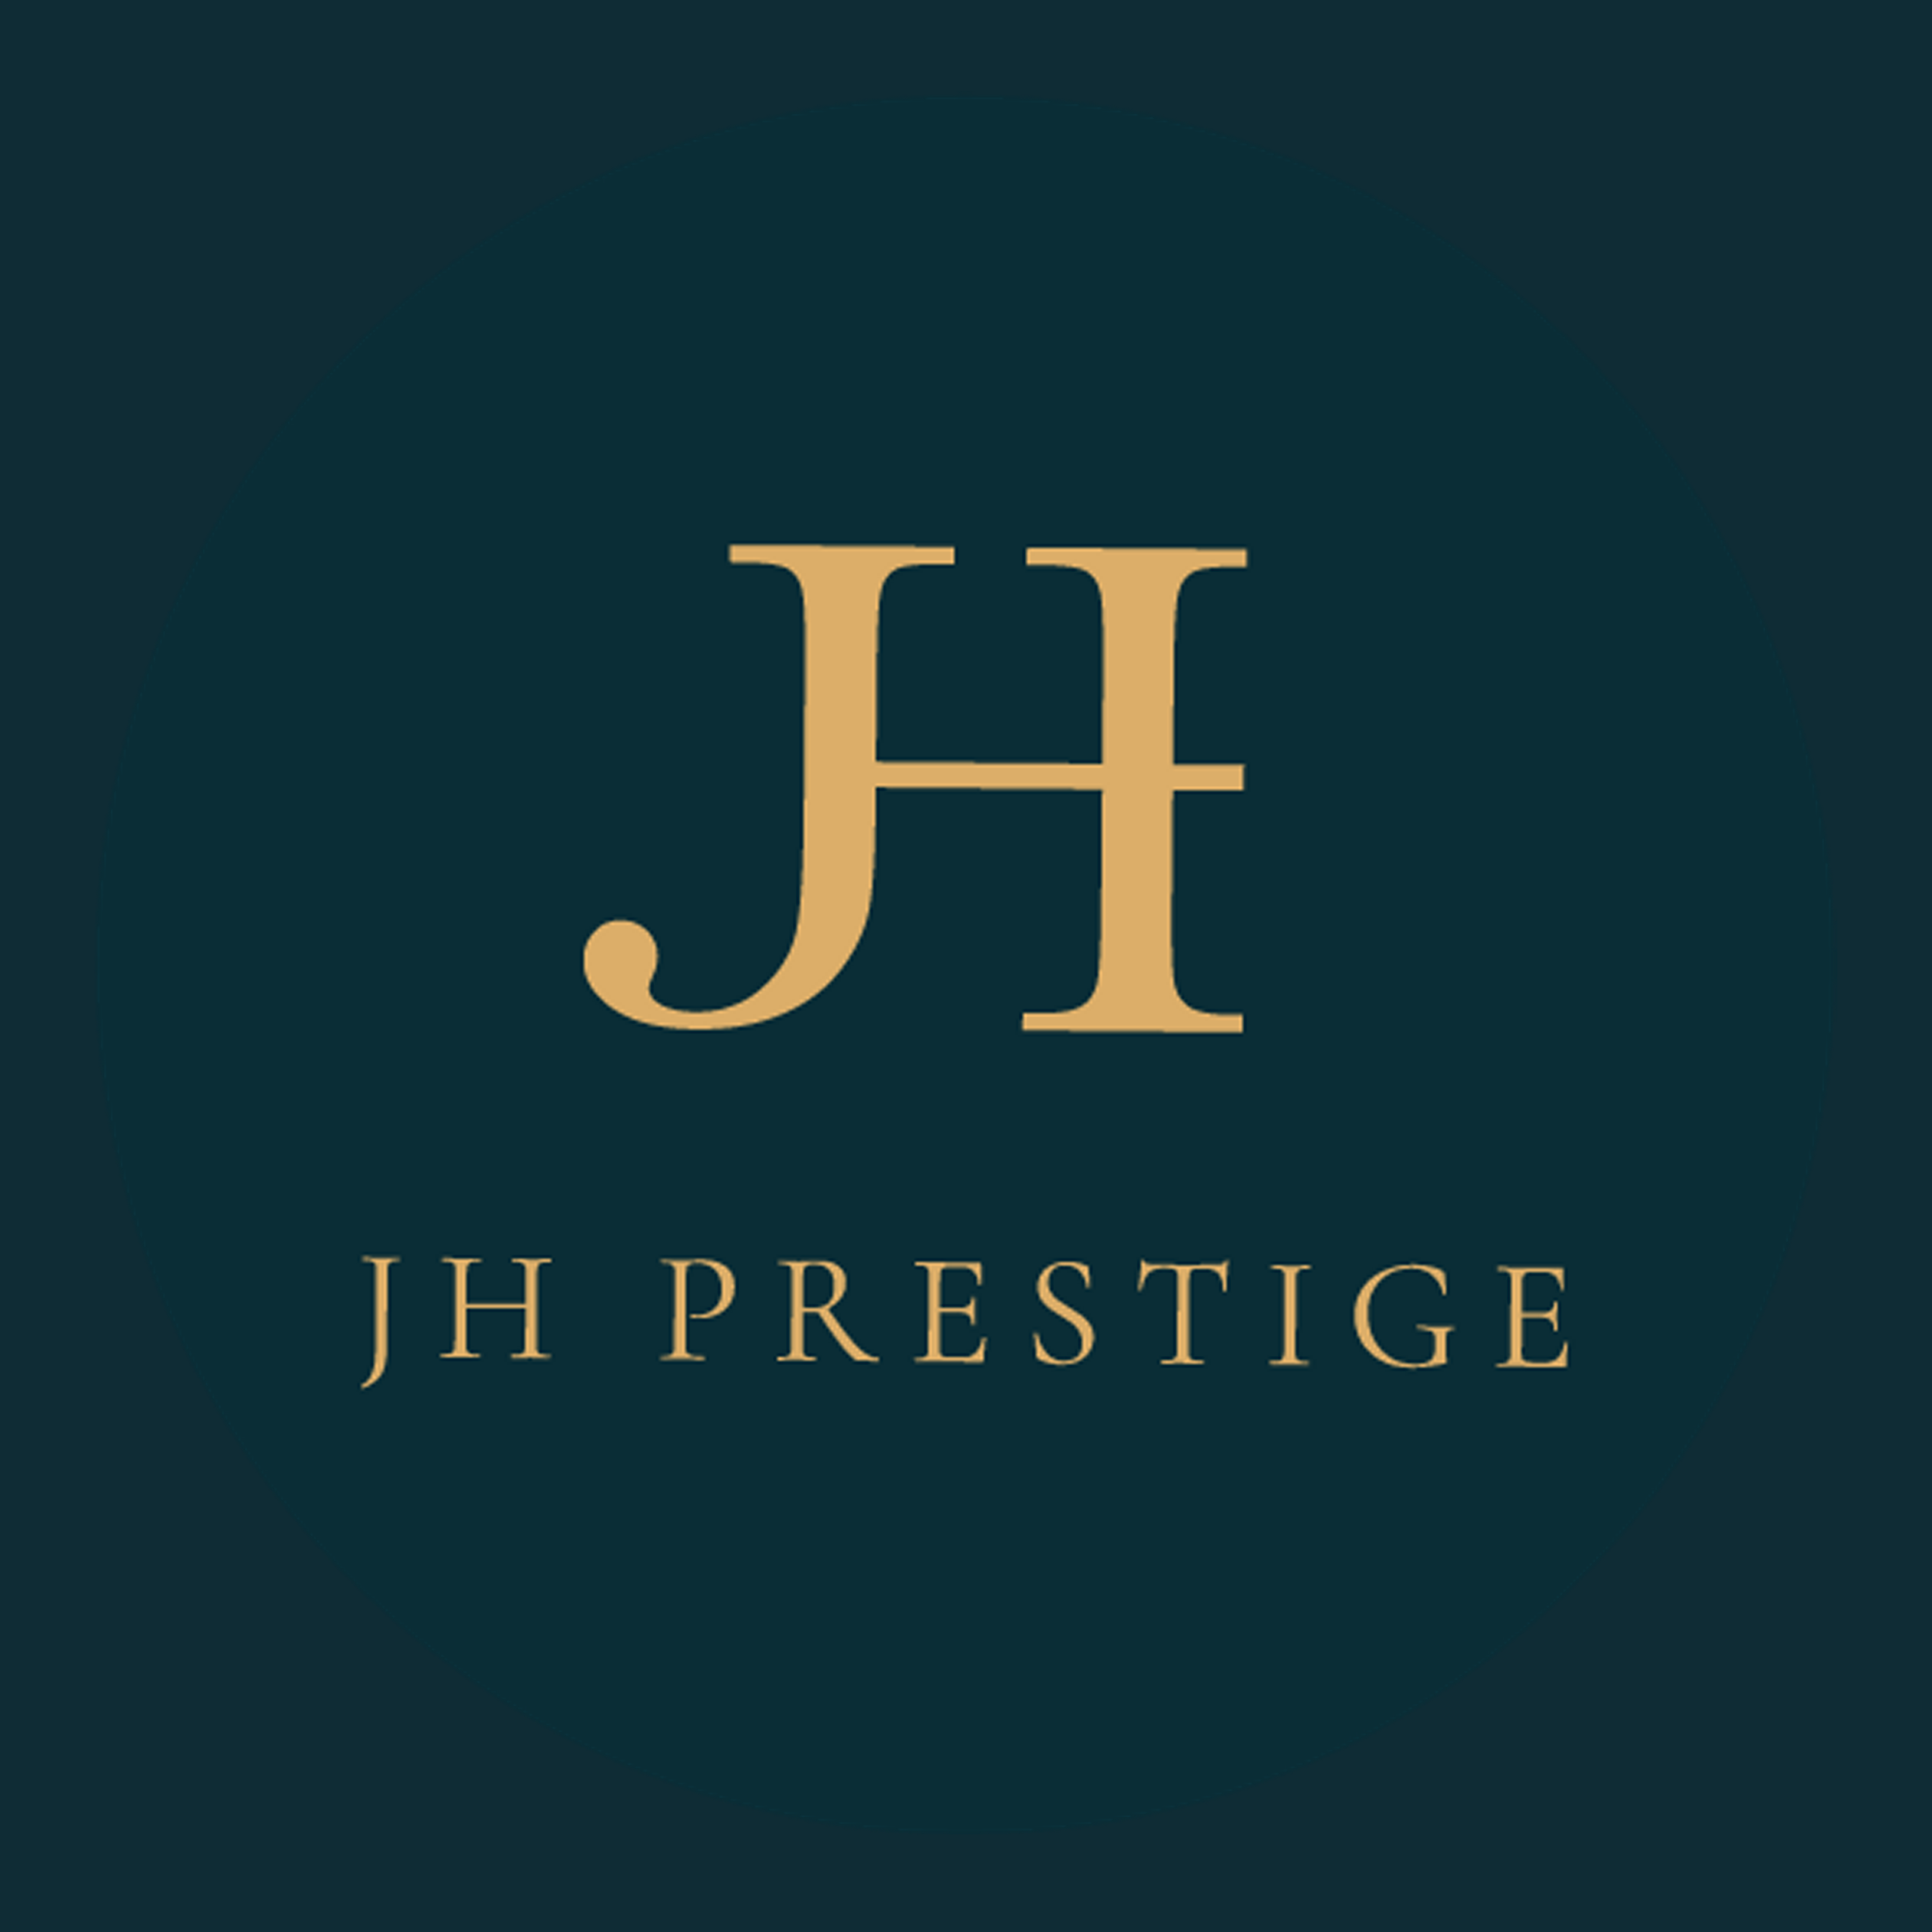 JH Prestigue